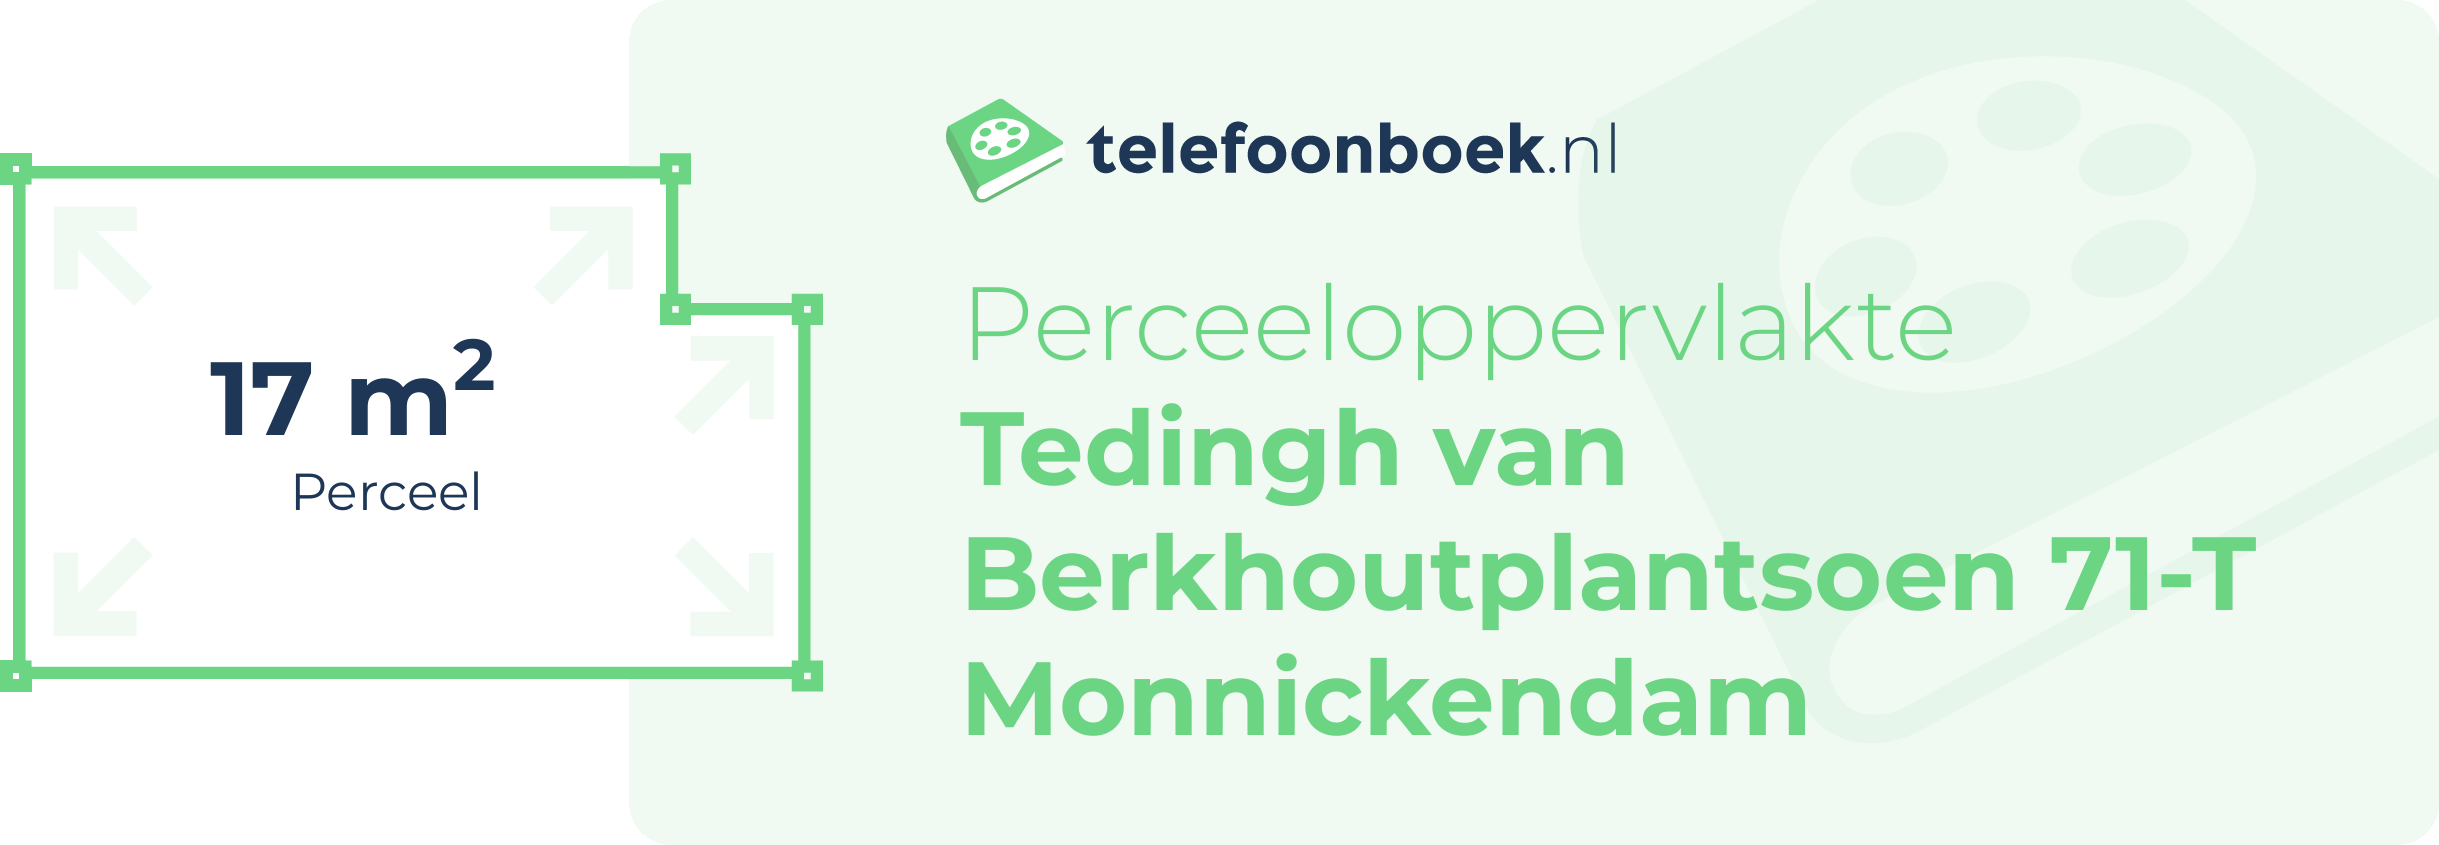 Perceeloppervlakte Tedingh Van Berkhoutplantsoen 71-T Monnickendam